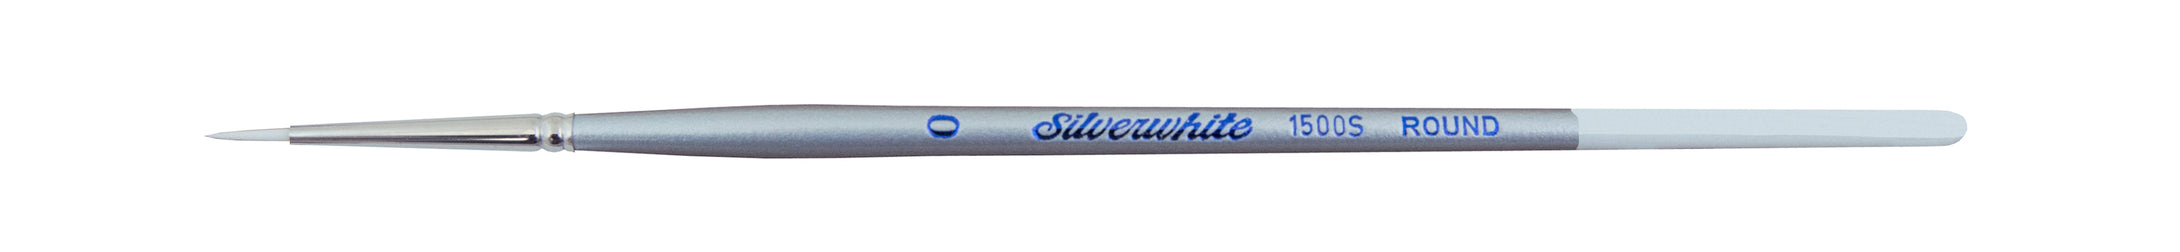 Silverwhite Brushes 1500S